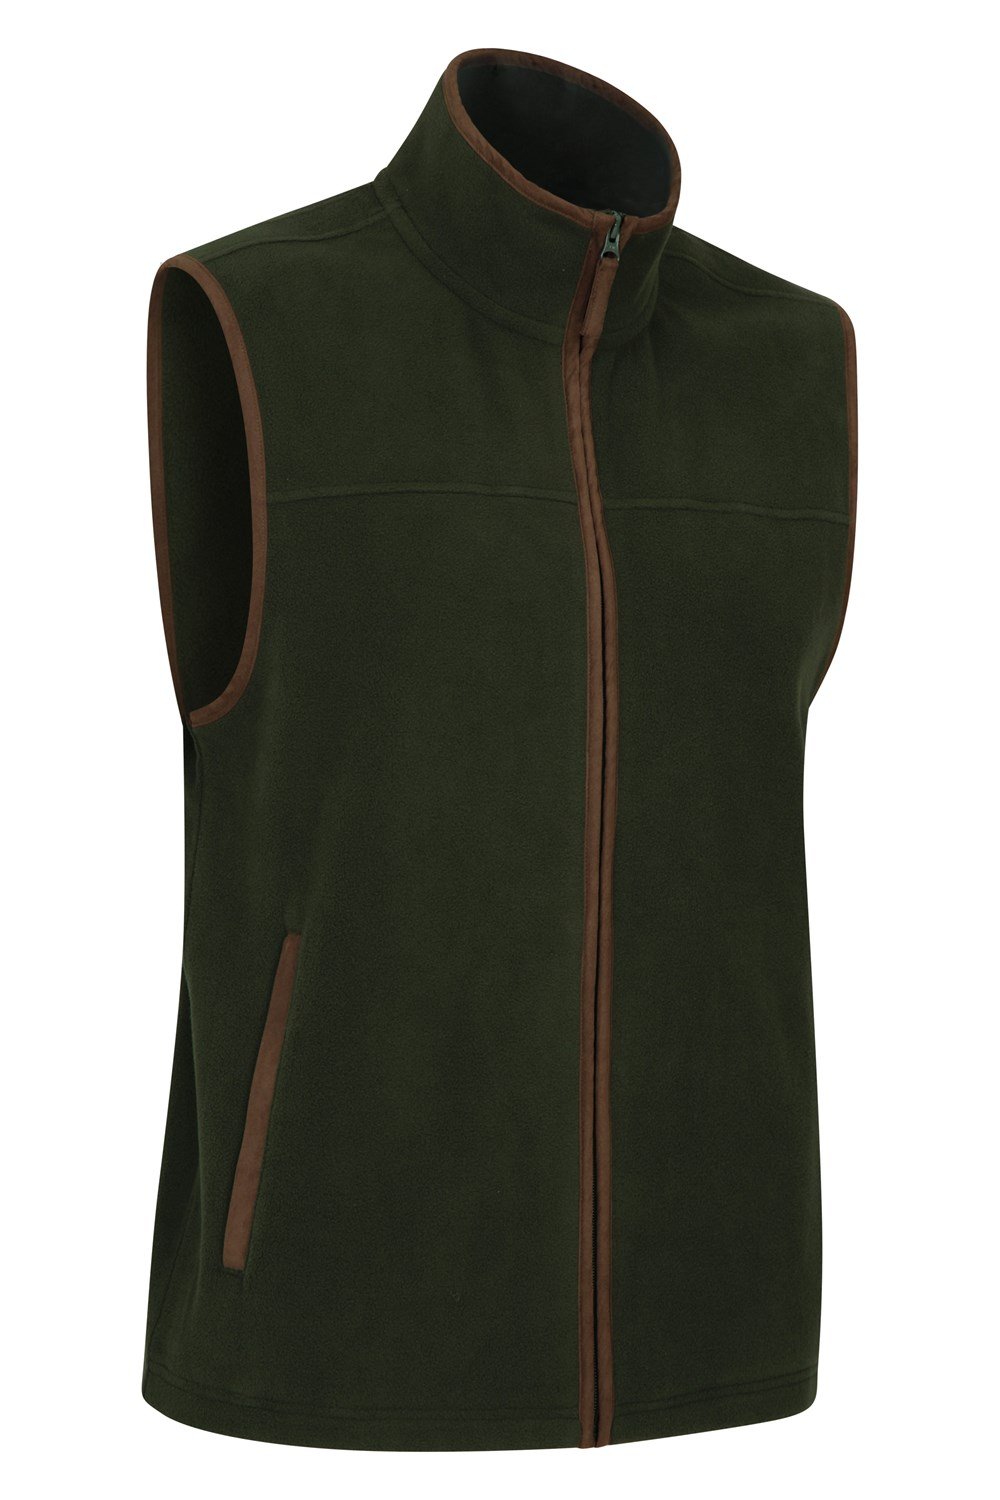 Ibex Mens Body Warmer//Gilets Light Weight Padded Winter Sleeveless Jackets Coat Black Large